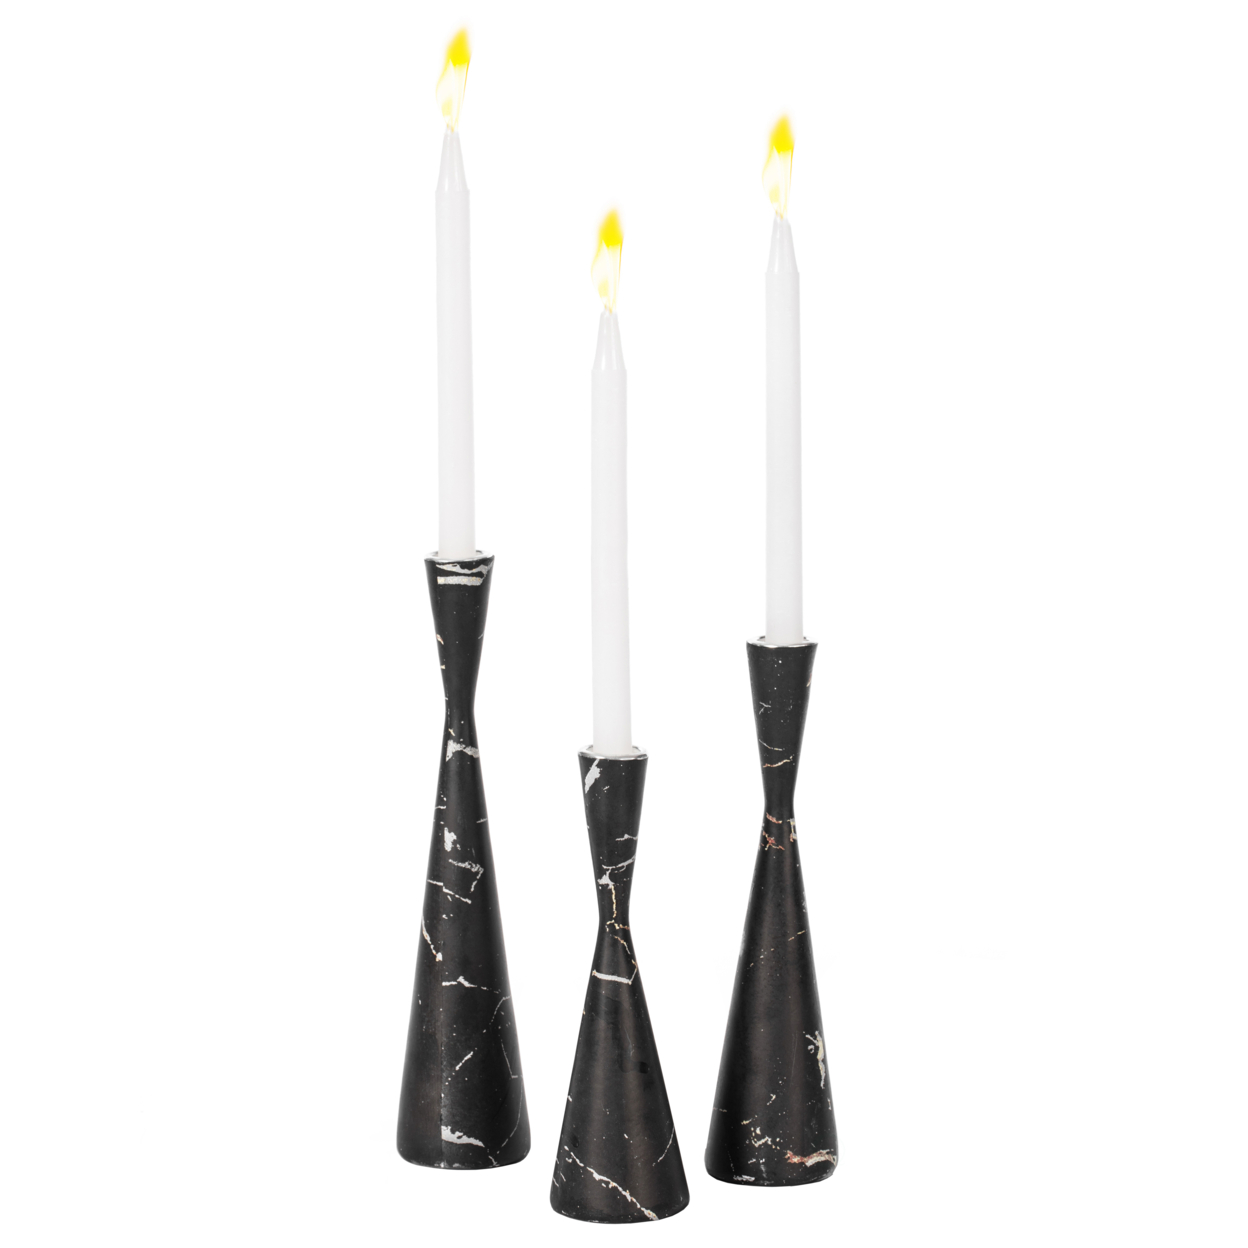 Set Of 3 Decorative Resin Taper Candle Holders, Marble Design Modern Candlesticks - Black